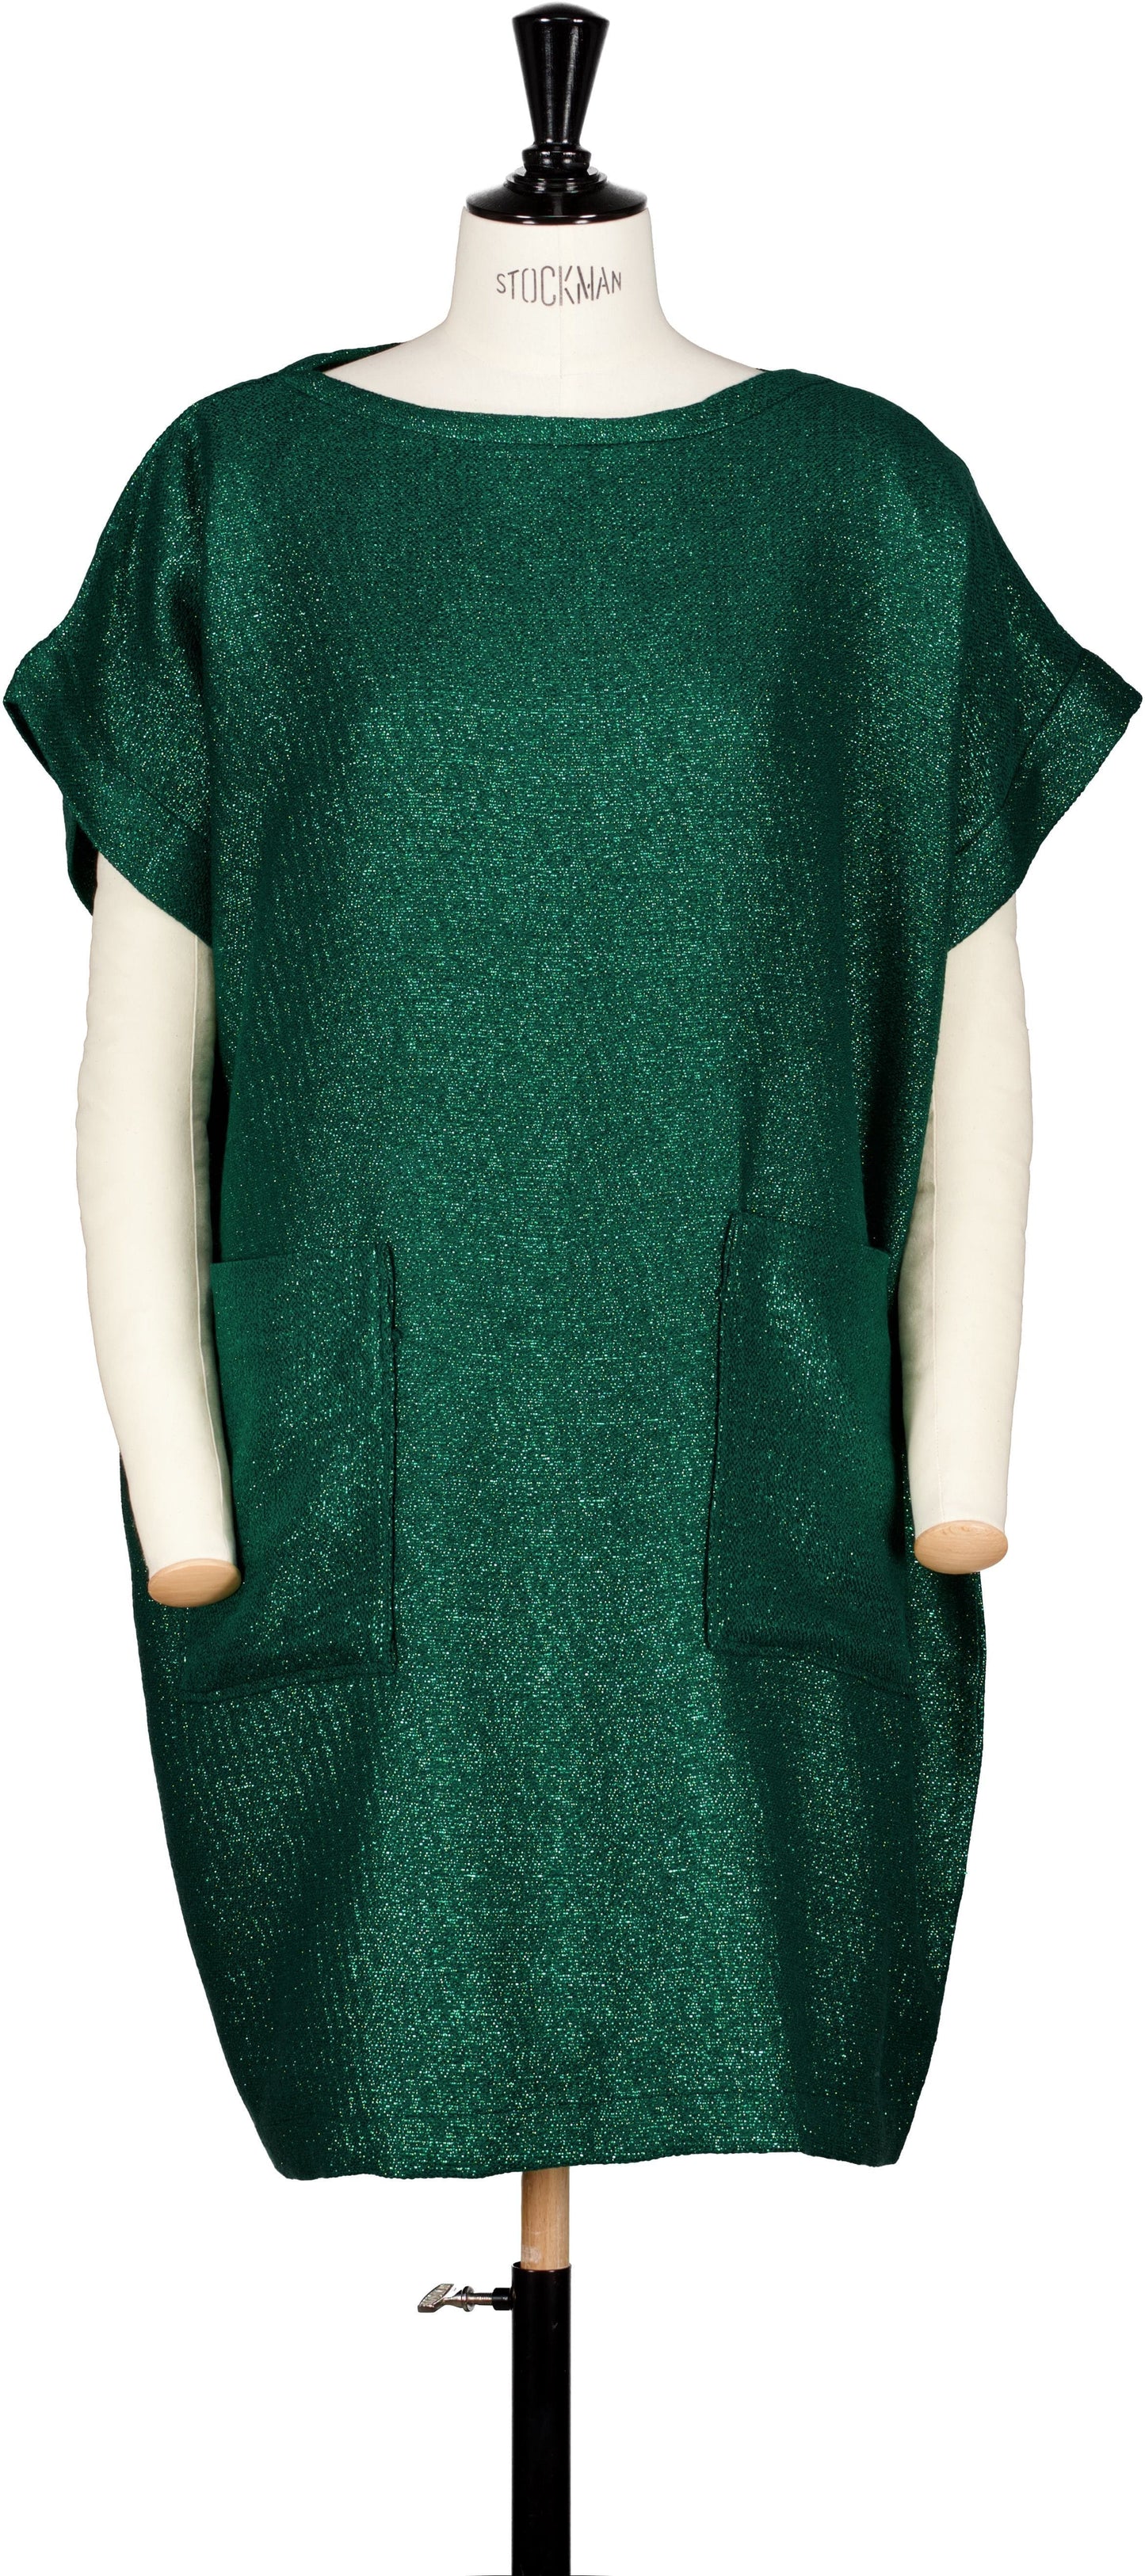 Robe en tweed vert sapin tissé et fabriquée en France